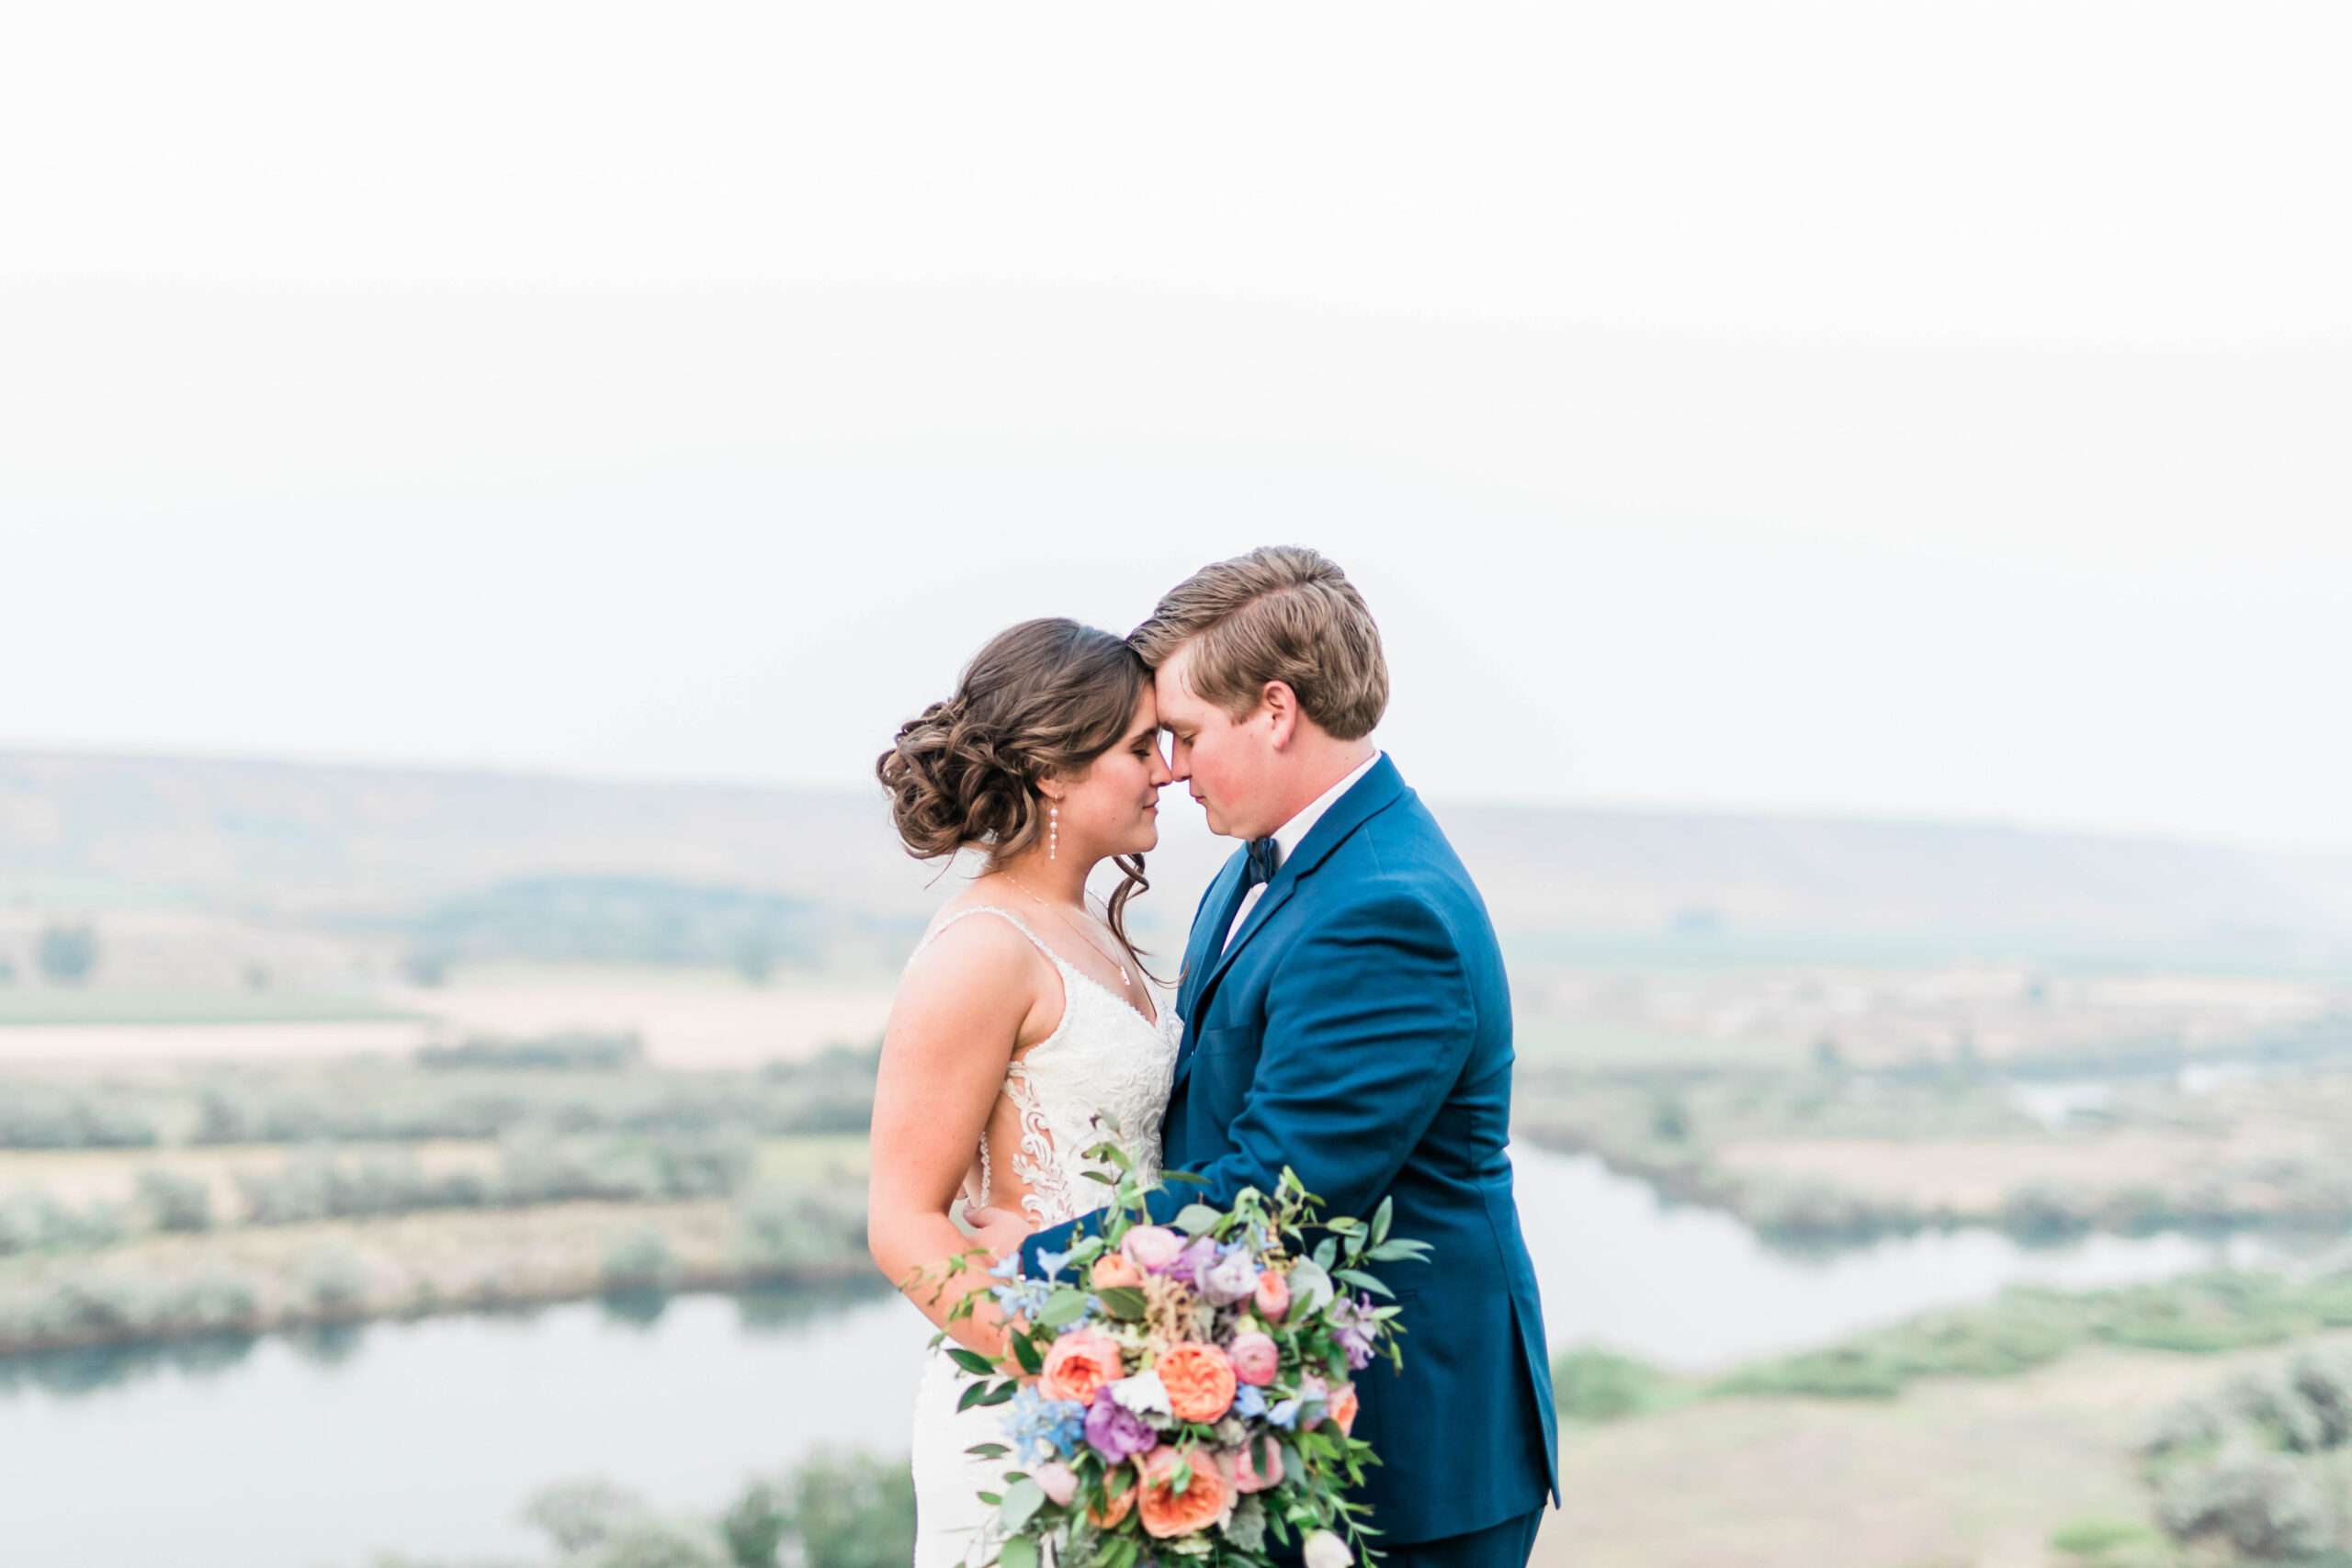 Boise wedding photographers capture couple embracing after Fox Canyon Vineyards wedding ceremony